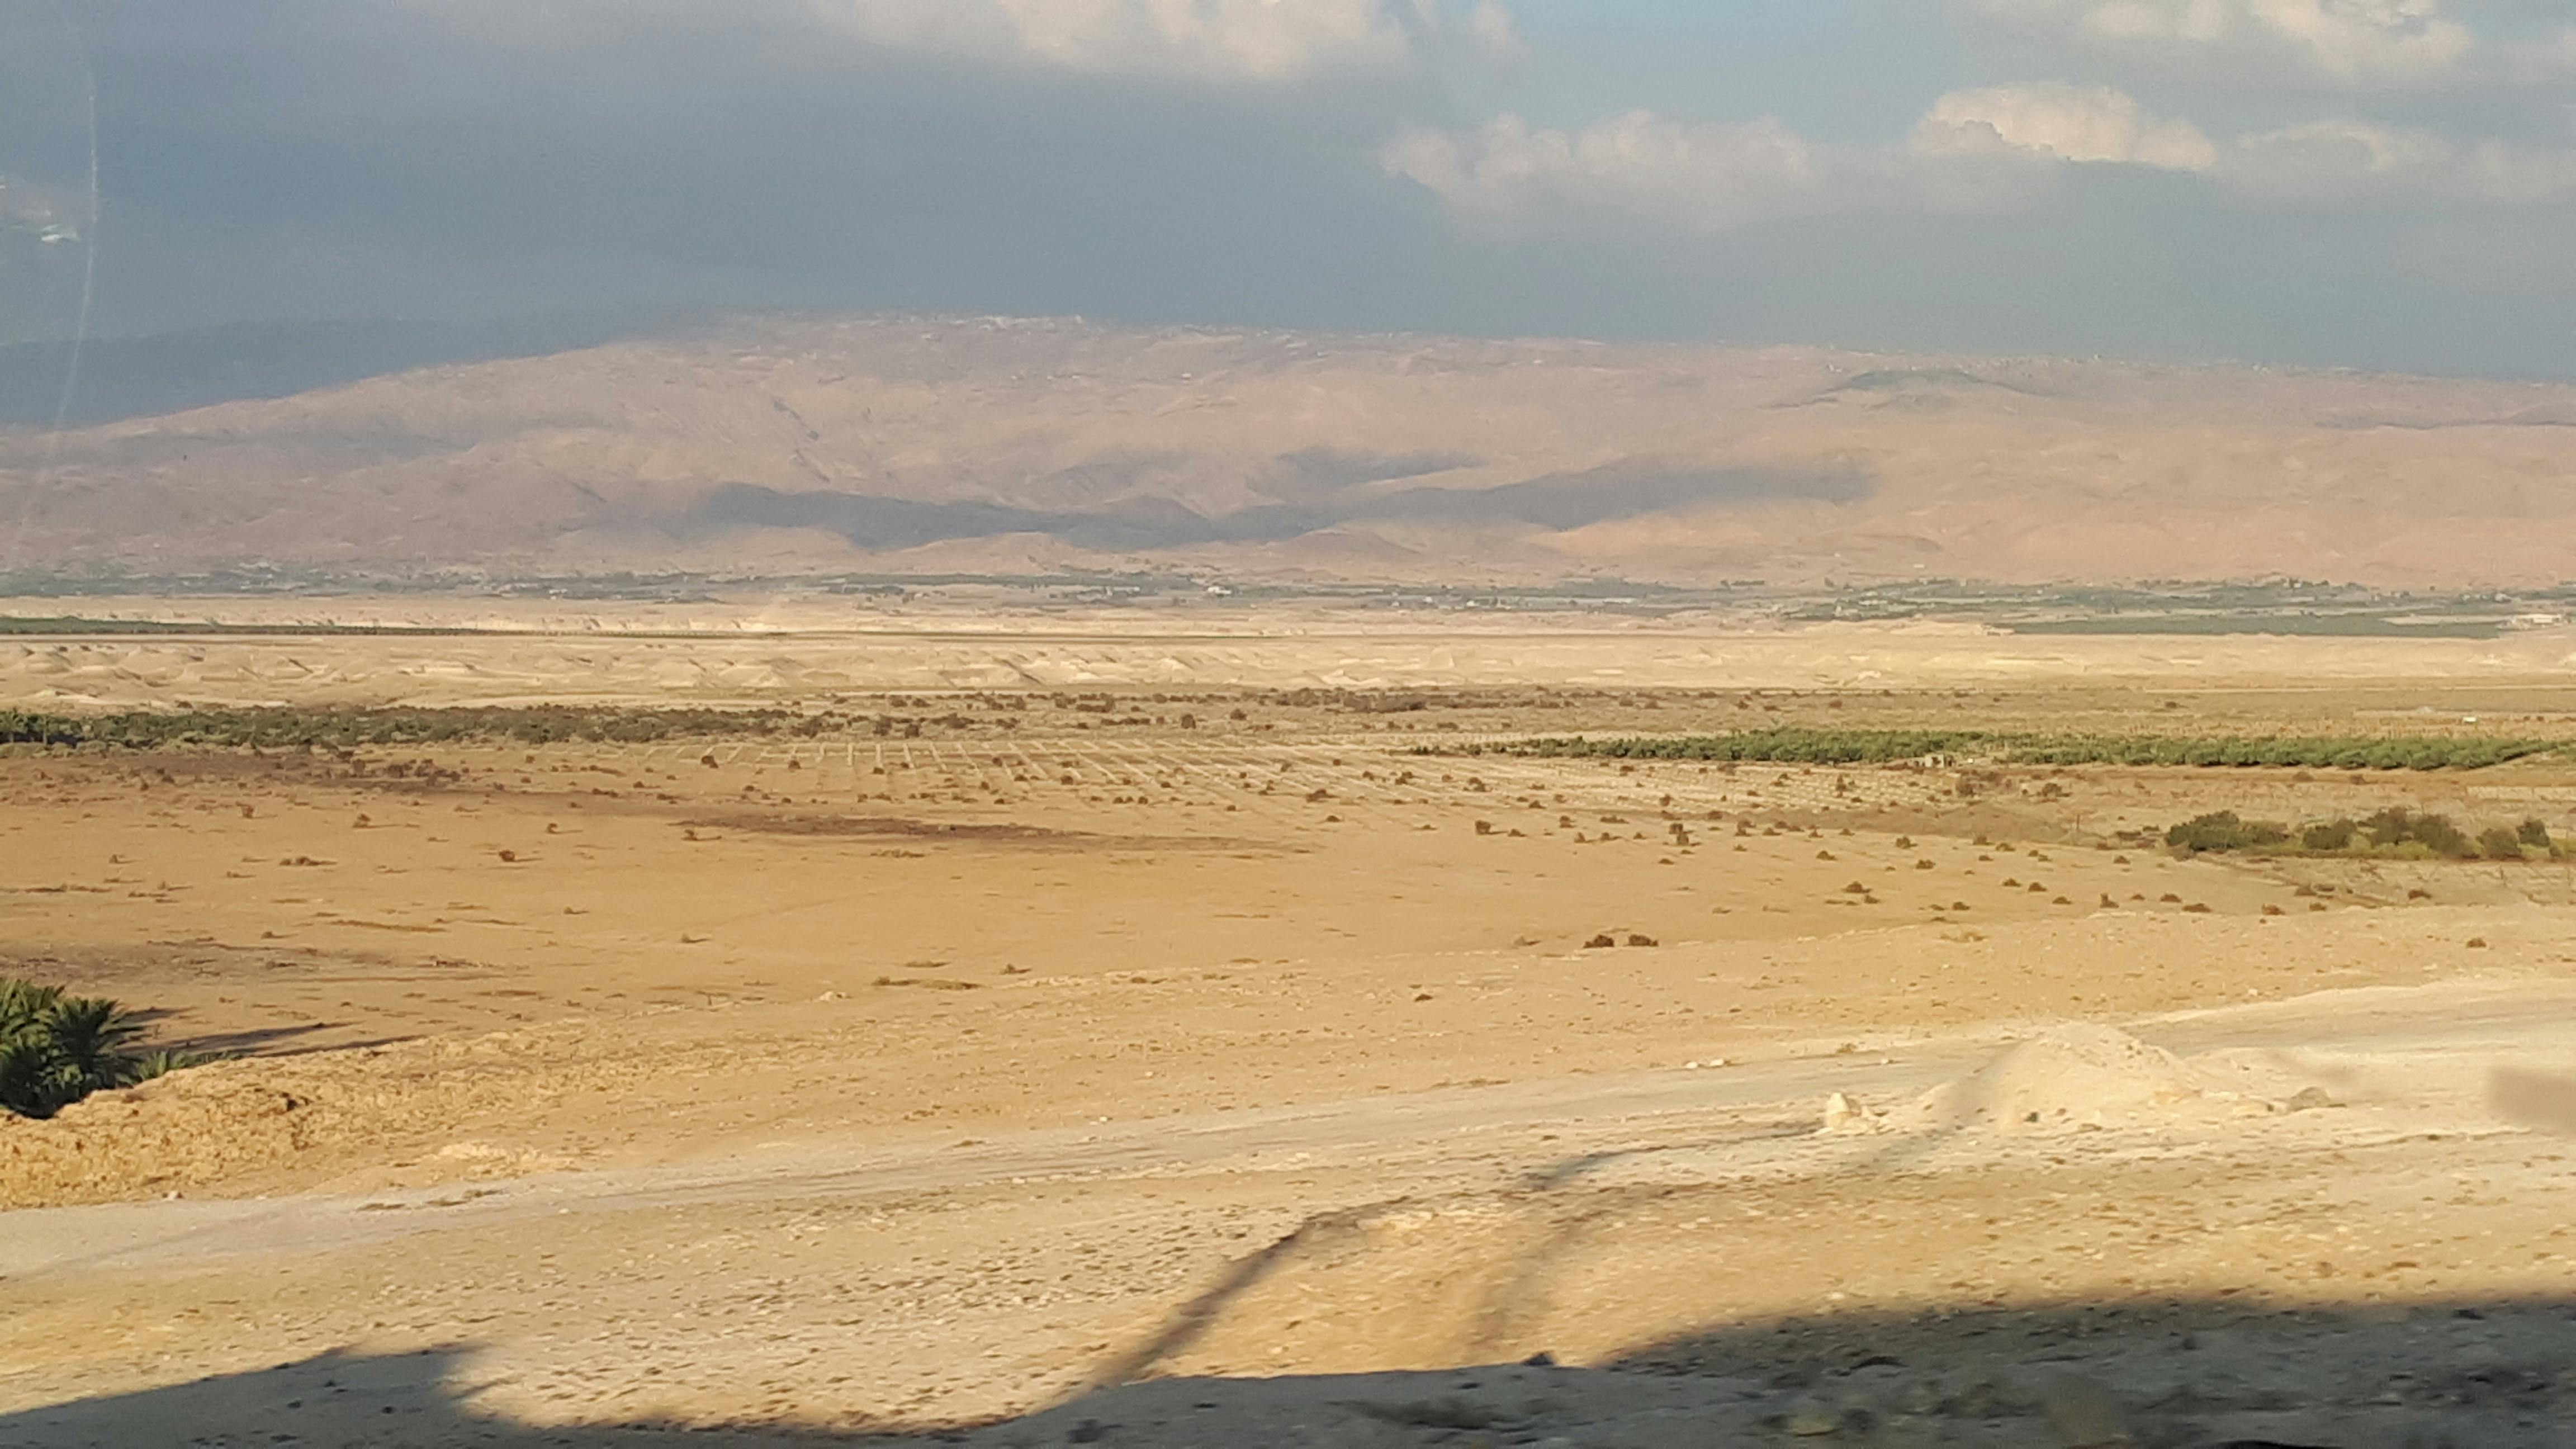 Free stock photo of Israel, Jordan Valley, valley